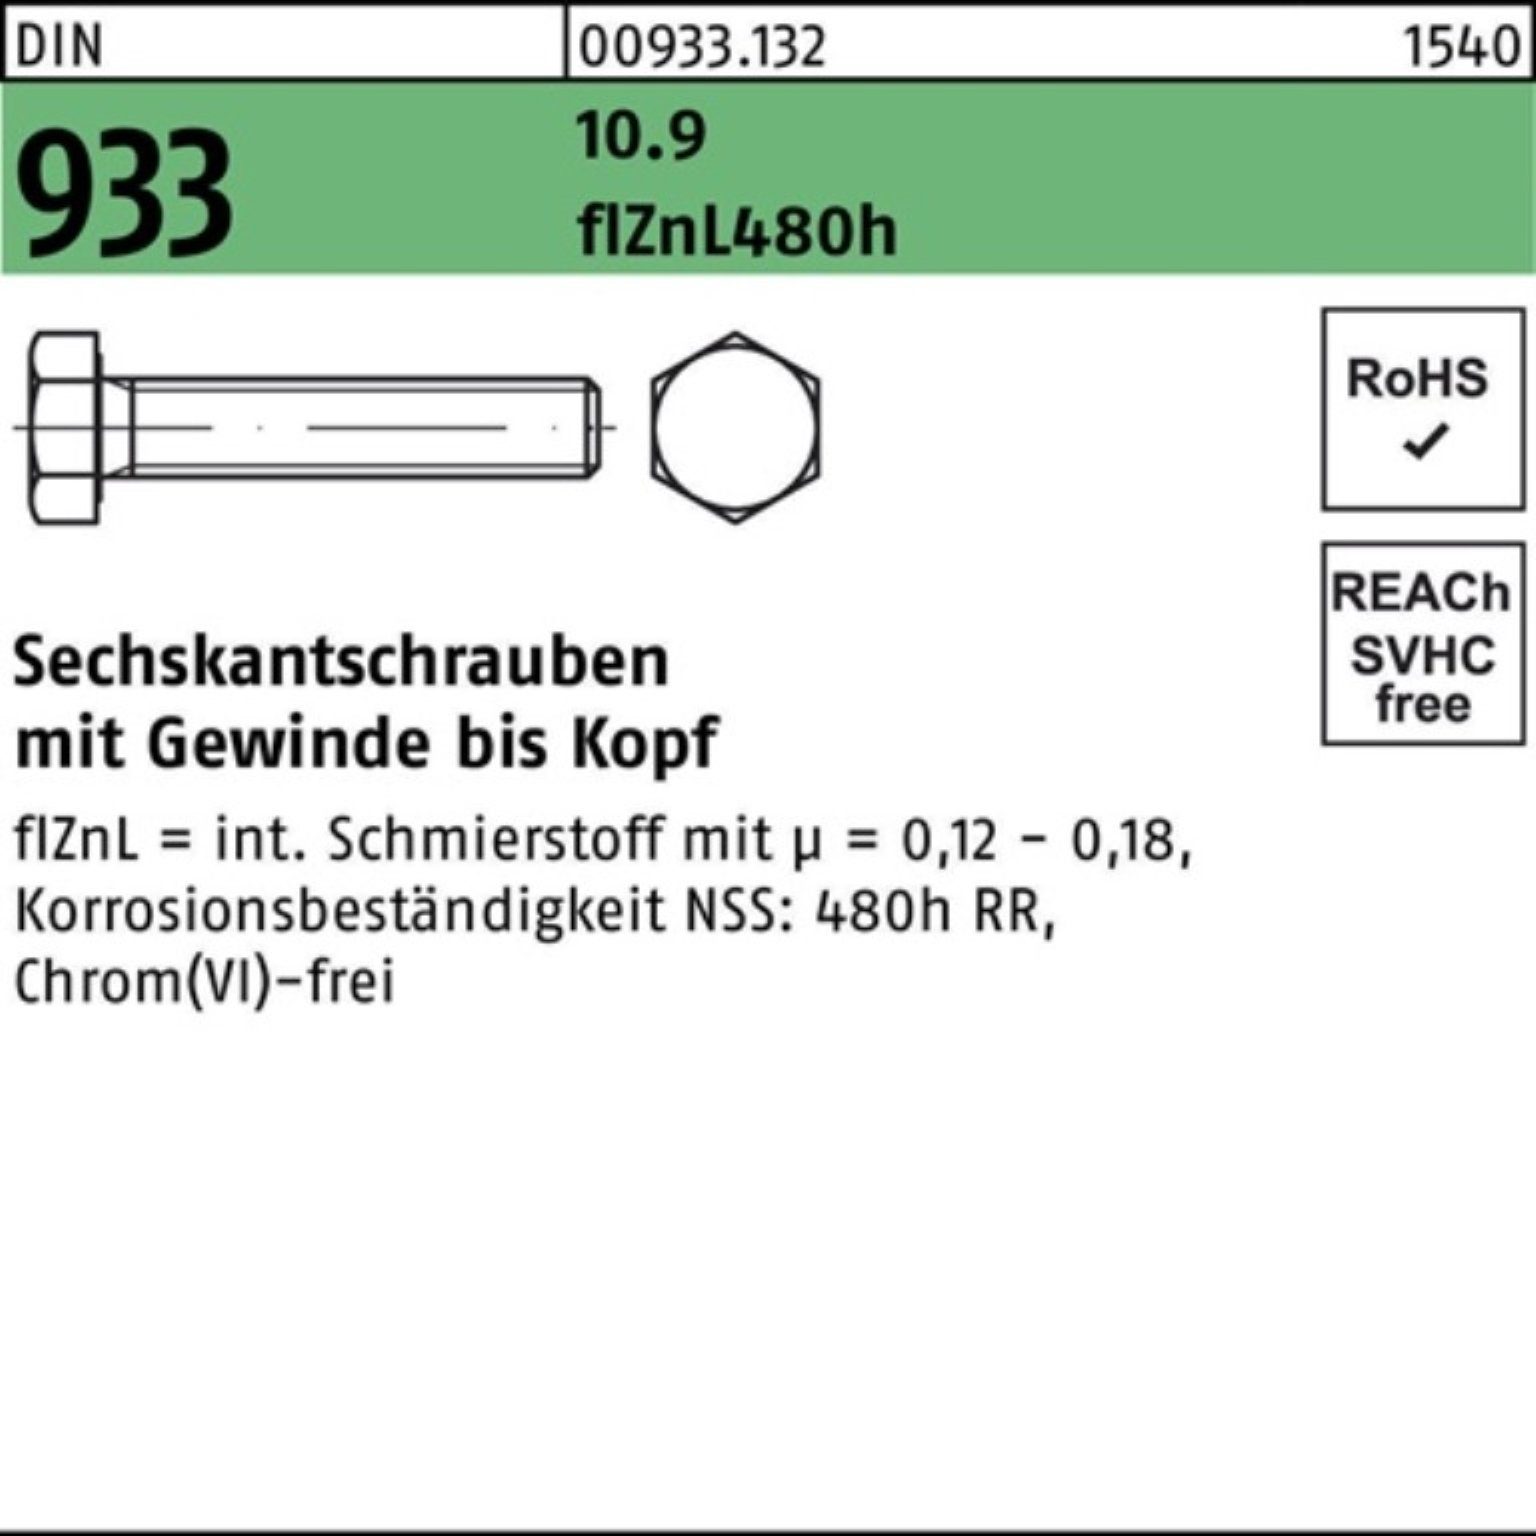 Reyher Sechskantschraube 100 Pack DIN 100er Sechskantschraube 933 flZnL/nc/x/x/480 VG M20x 10.9